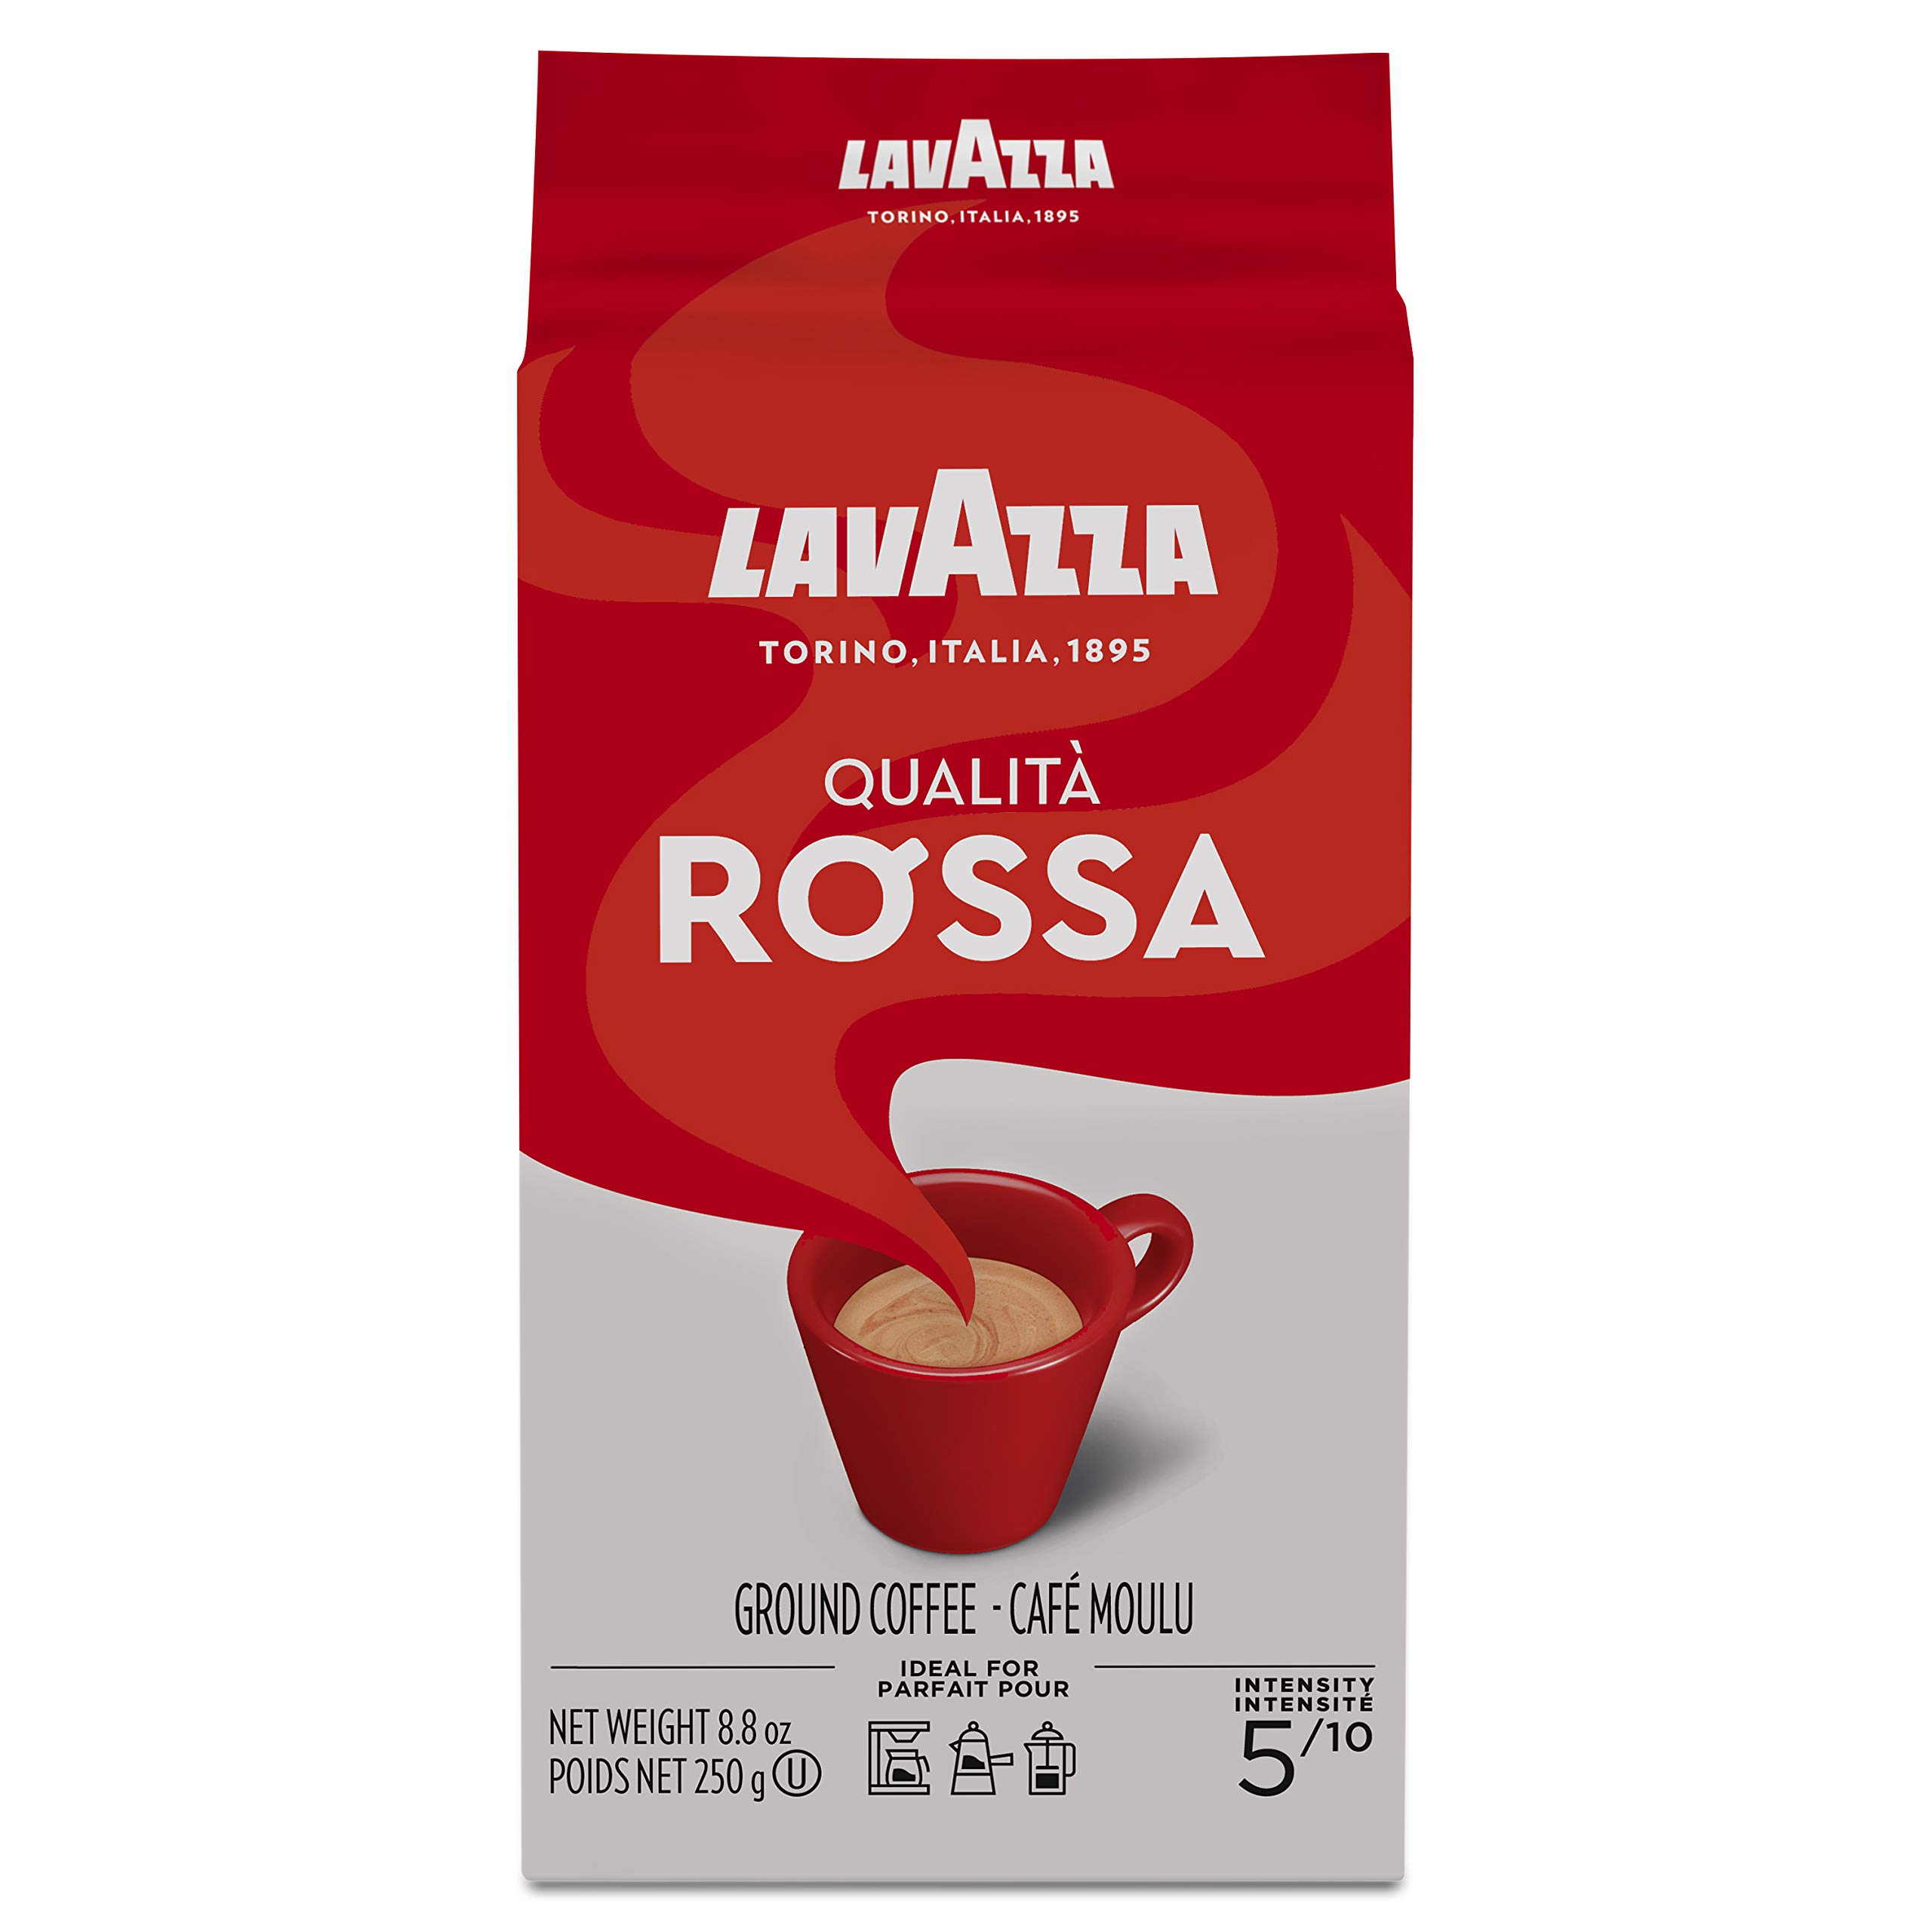 4-Pack 8.8-Oz Lavazza Qualita Rossa Ground Coffee Blend (Medium Roast) $10.20 + Free Shipping w/ Prime or on $25+